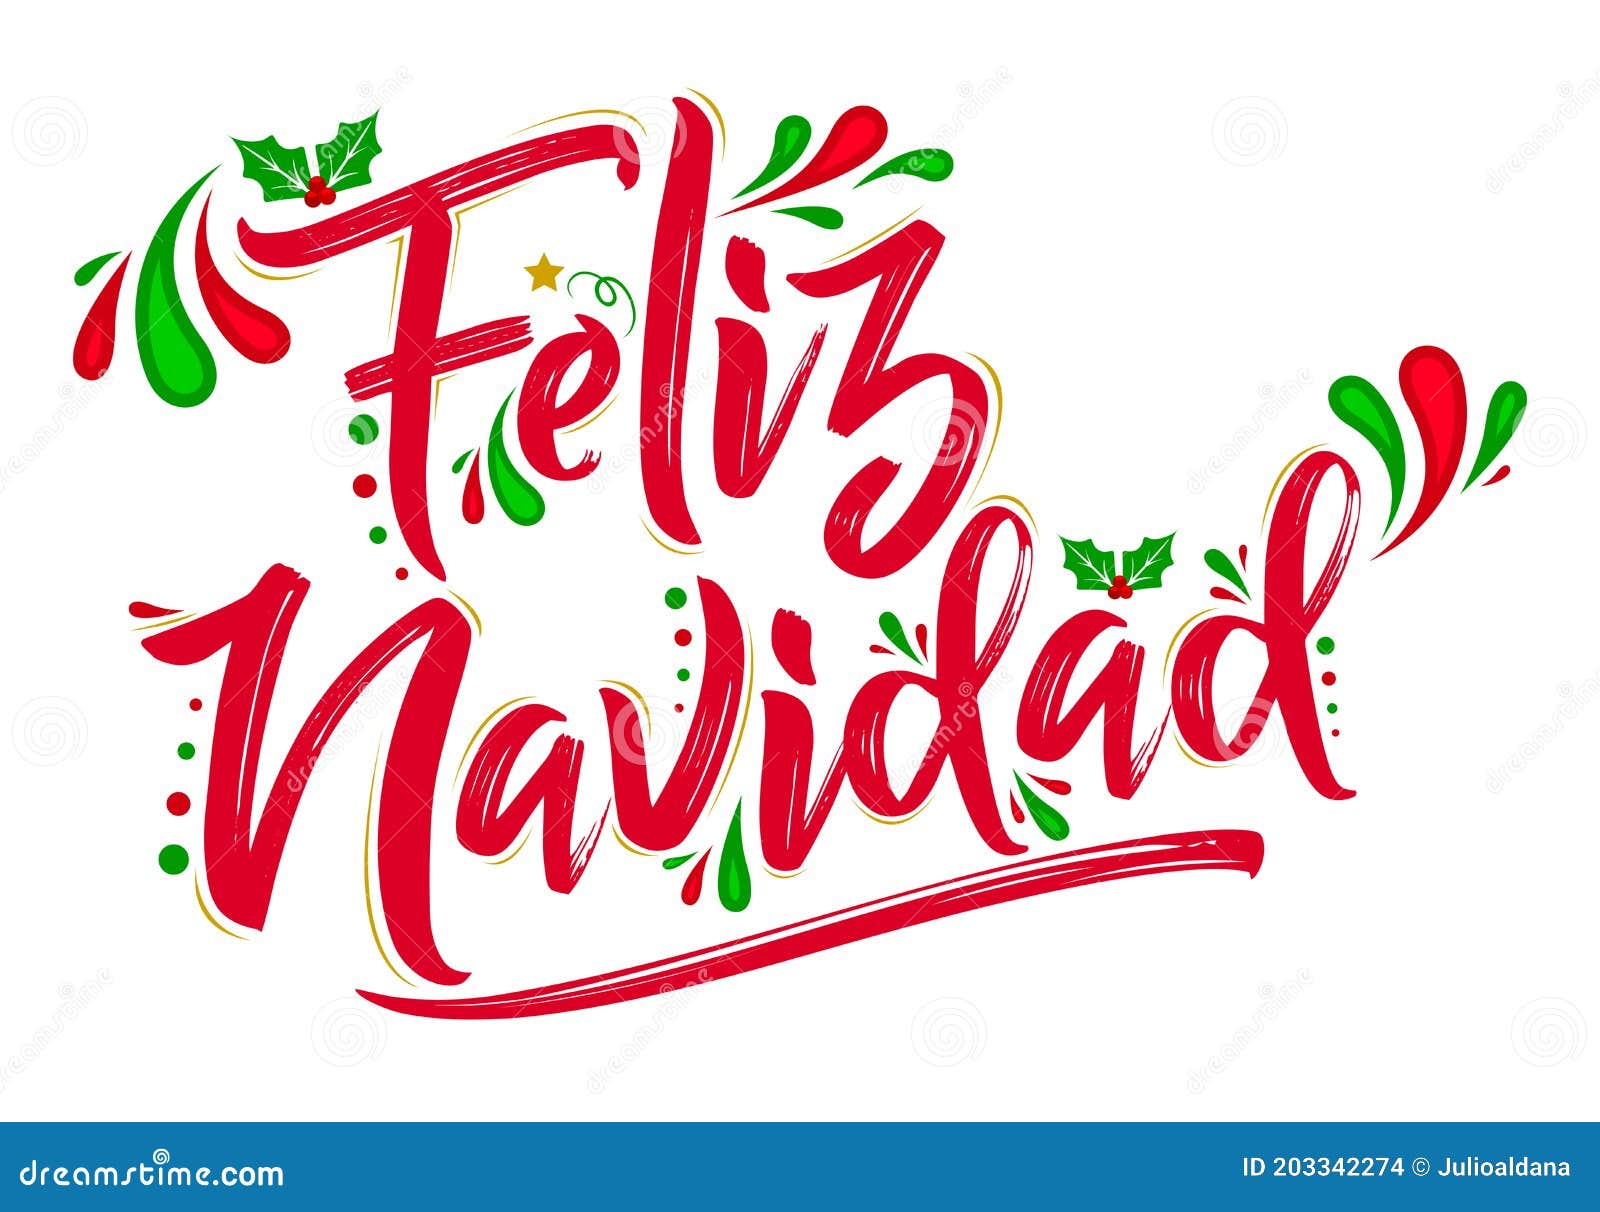 feliz navidad, merry christmas spanish text holiday .